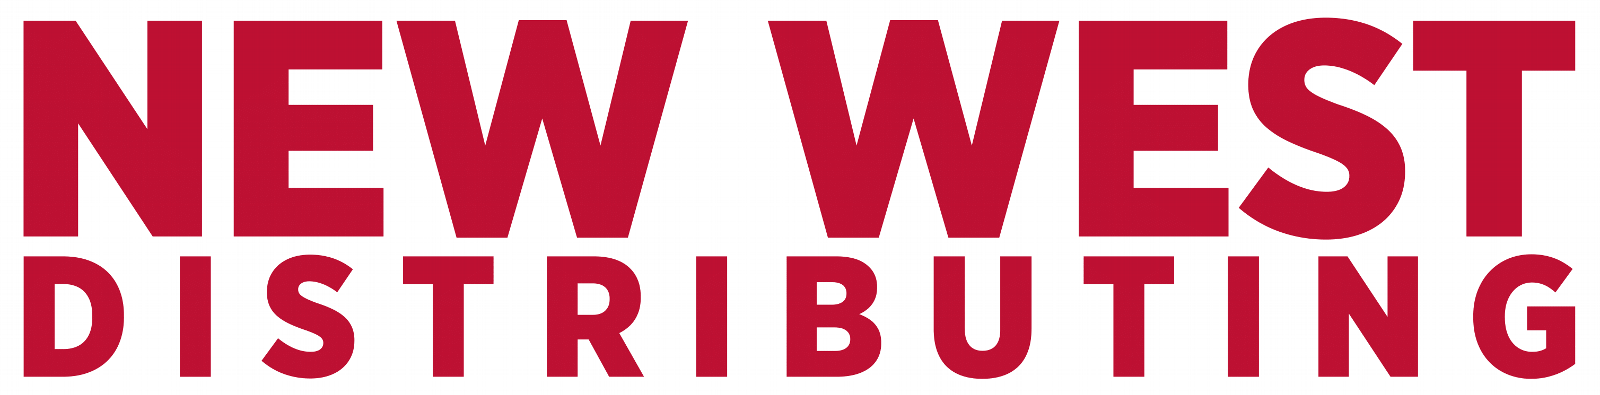 New West Distributing logo